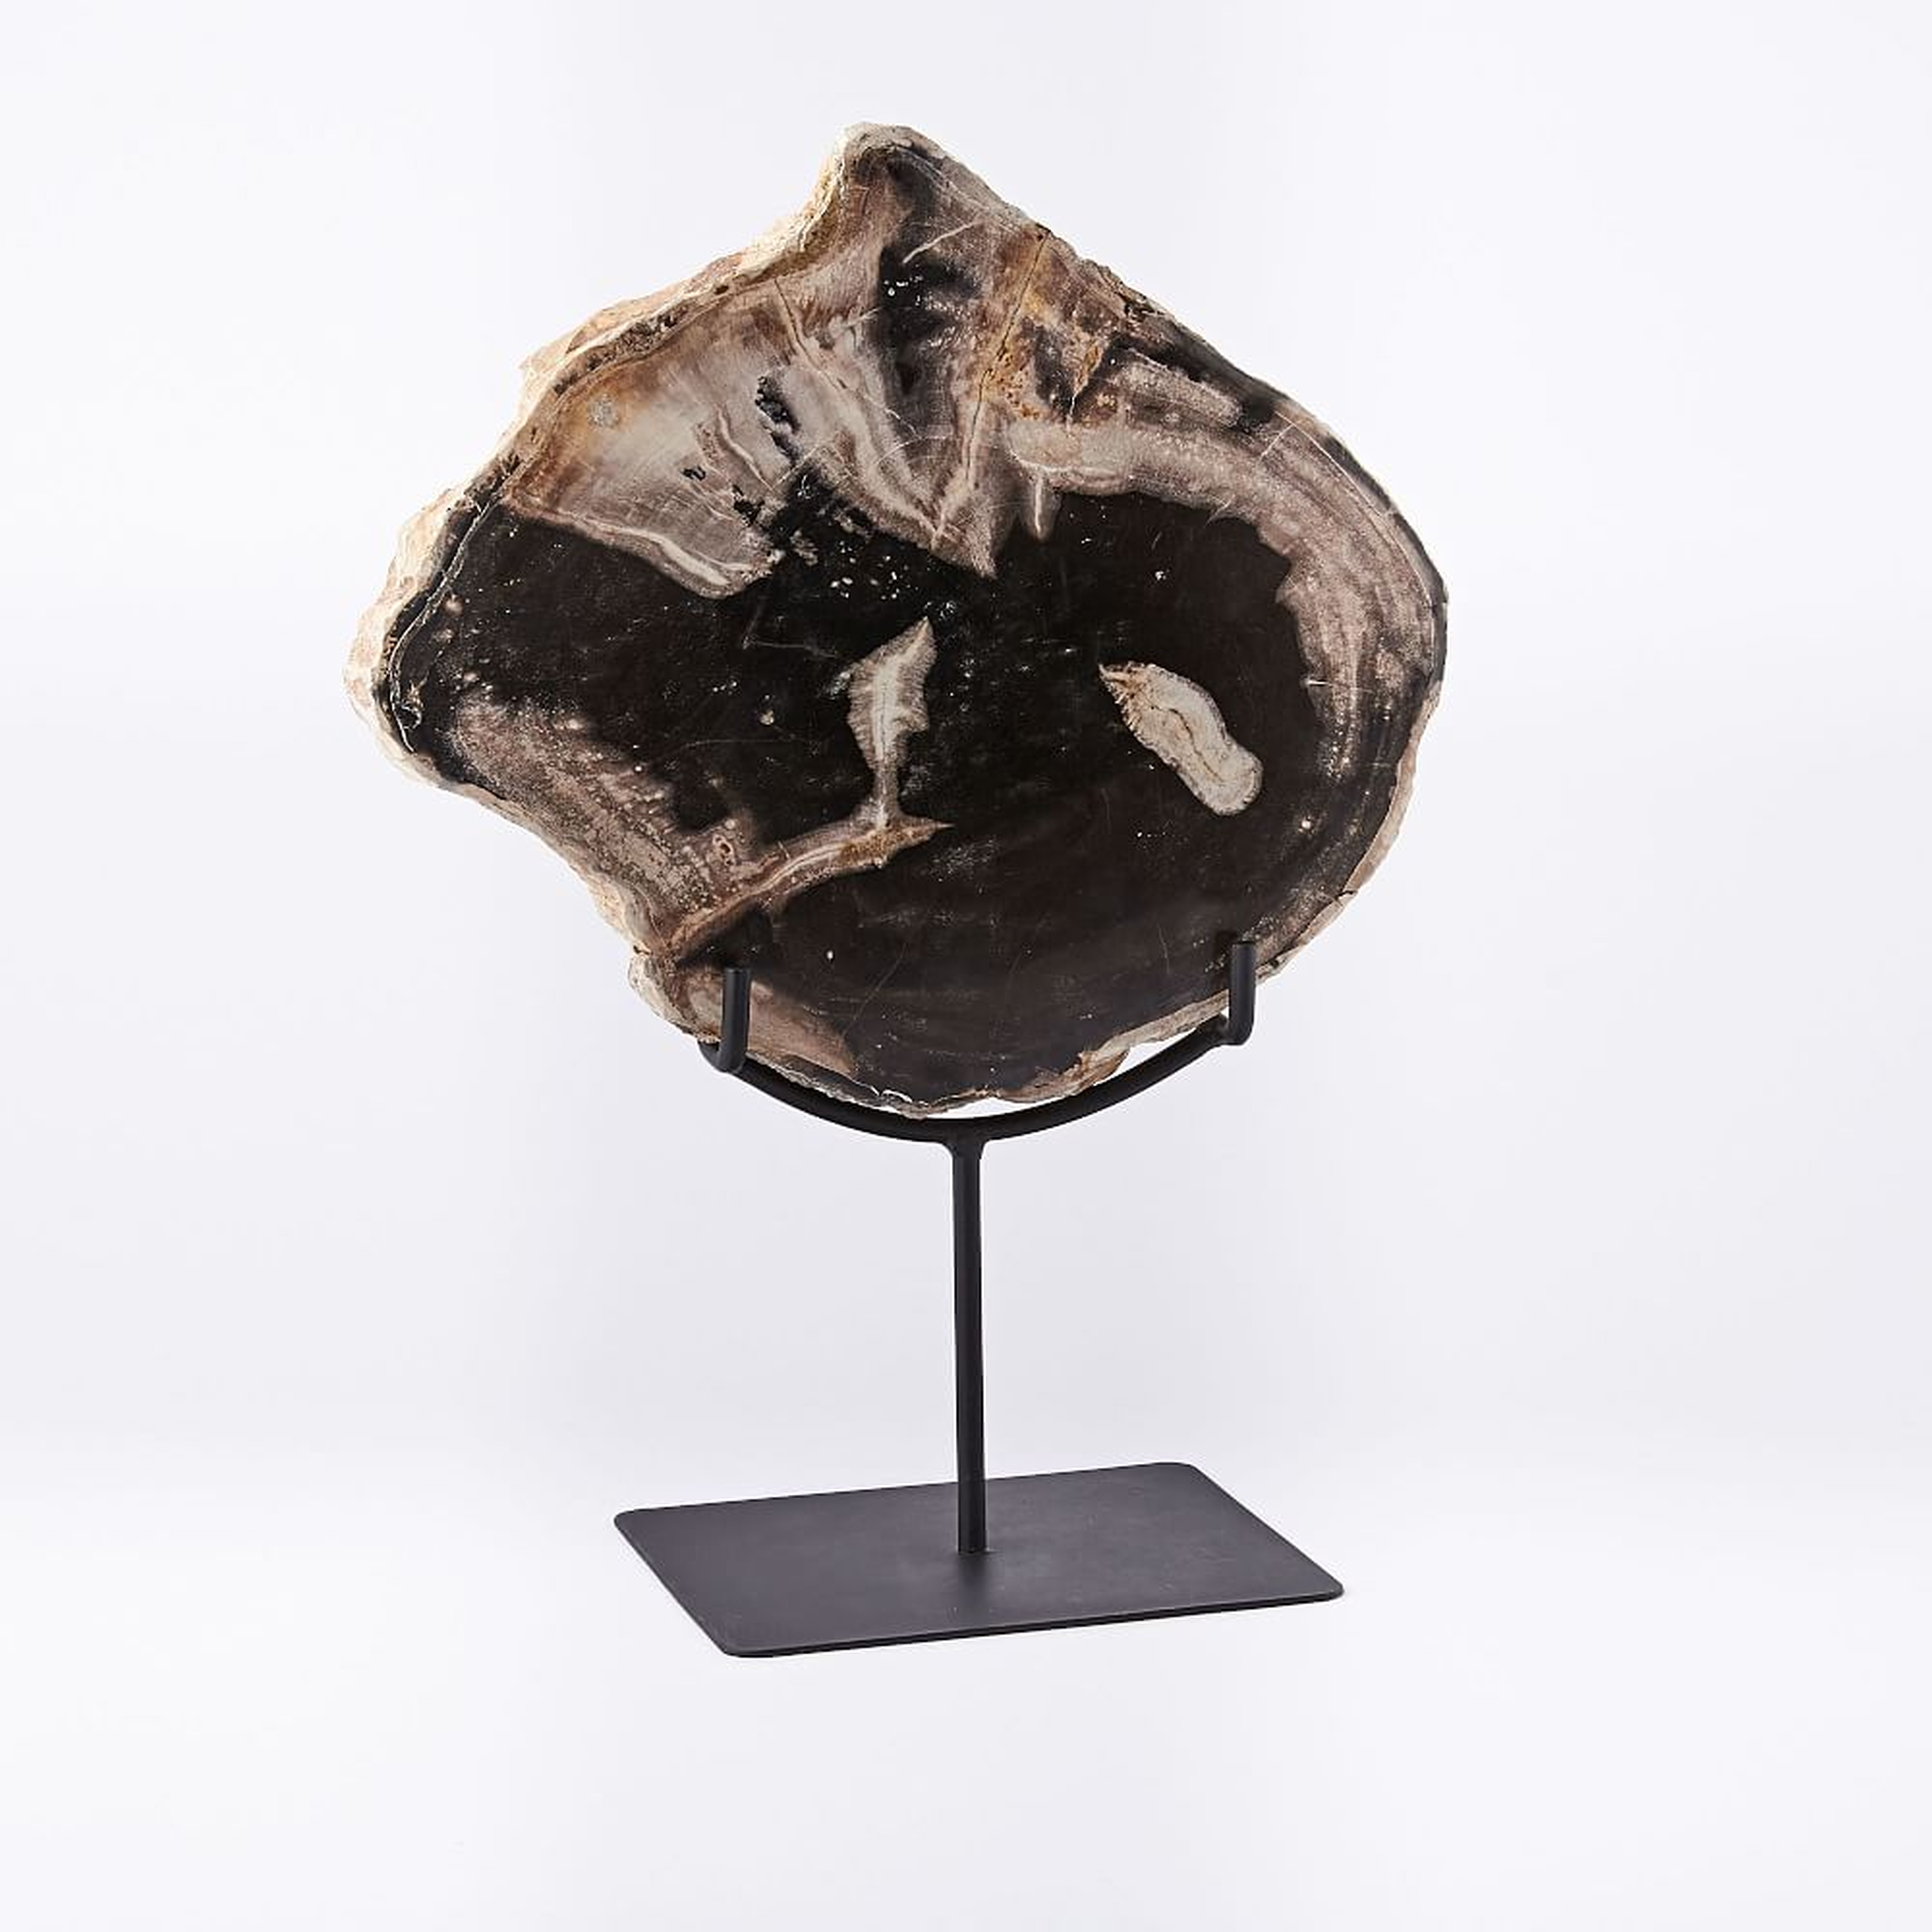 Petrified Wood Object on Stand, Large - West Elm